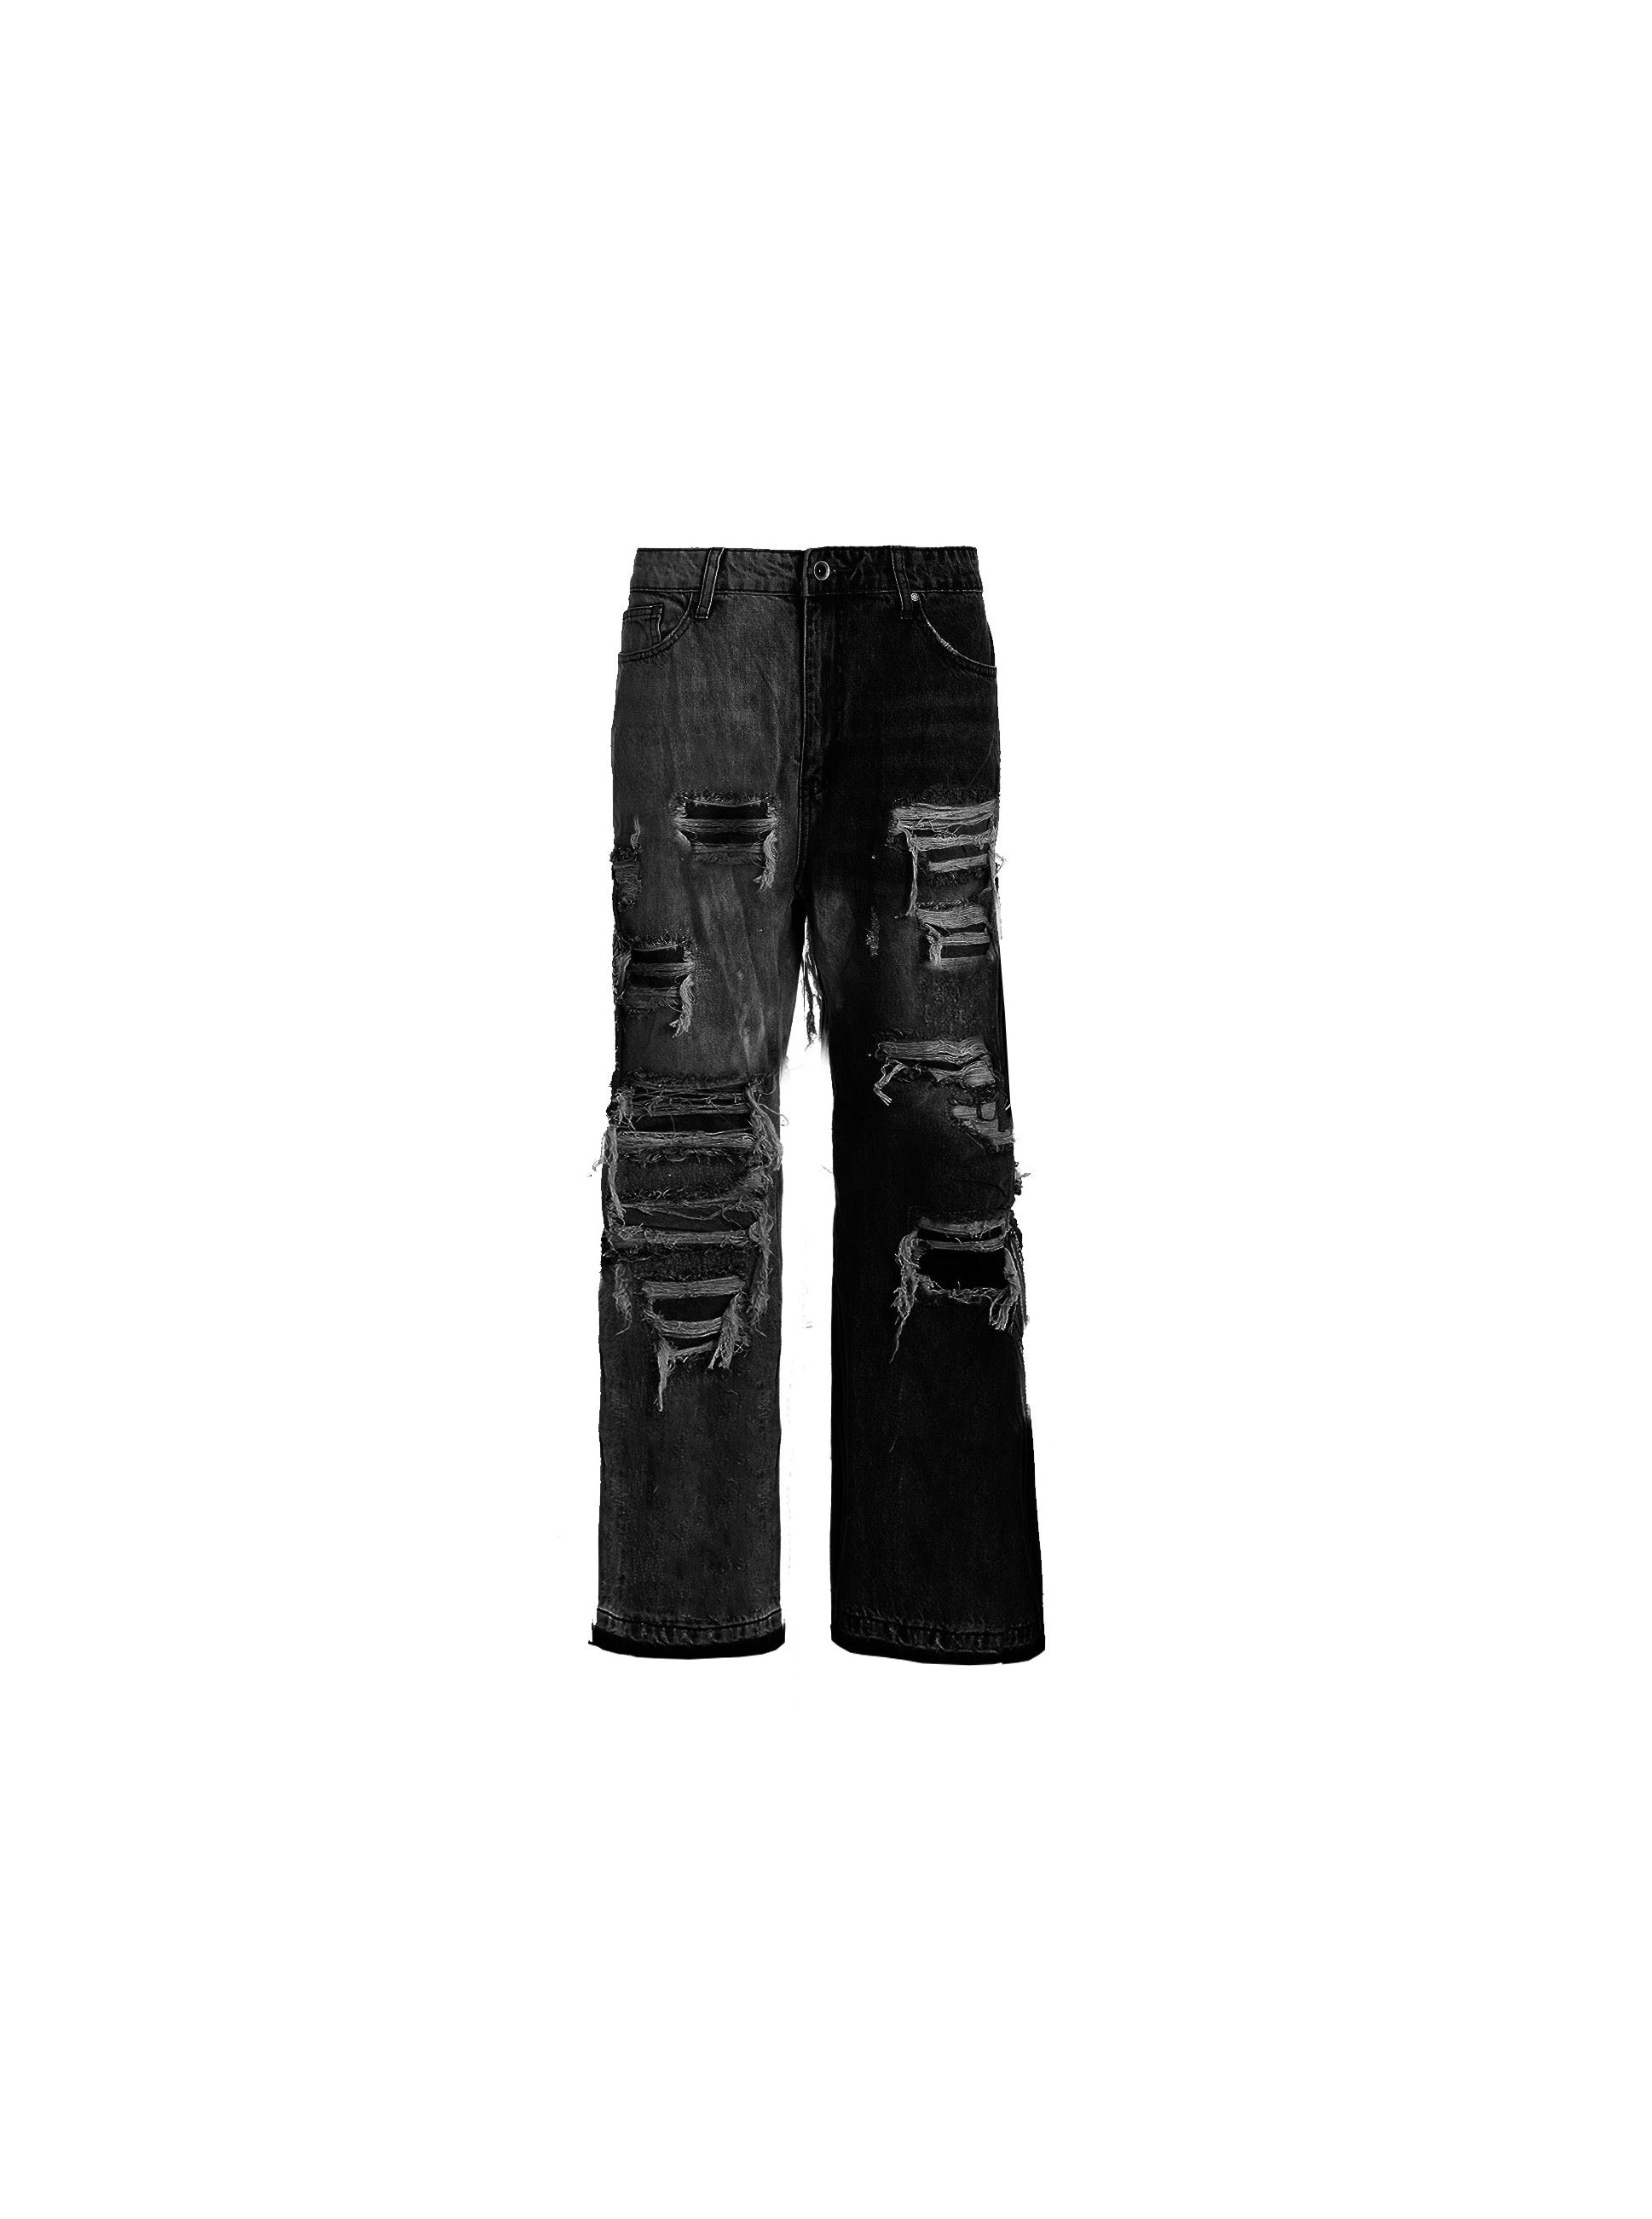 Sole et. Al Distressed tvåfärgad utsvängd jeans : All Black / Wash Grey